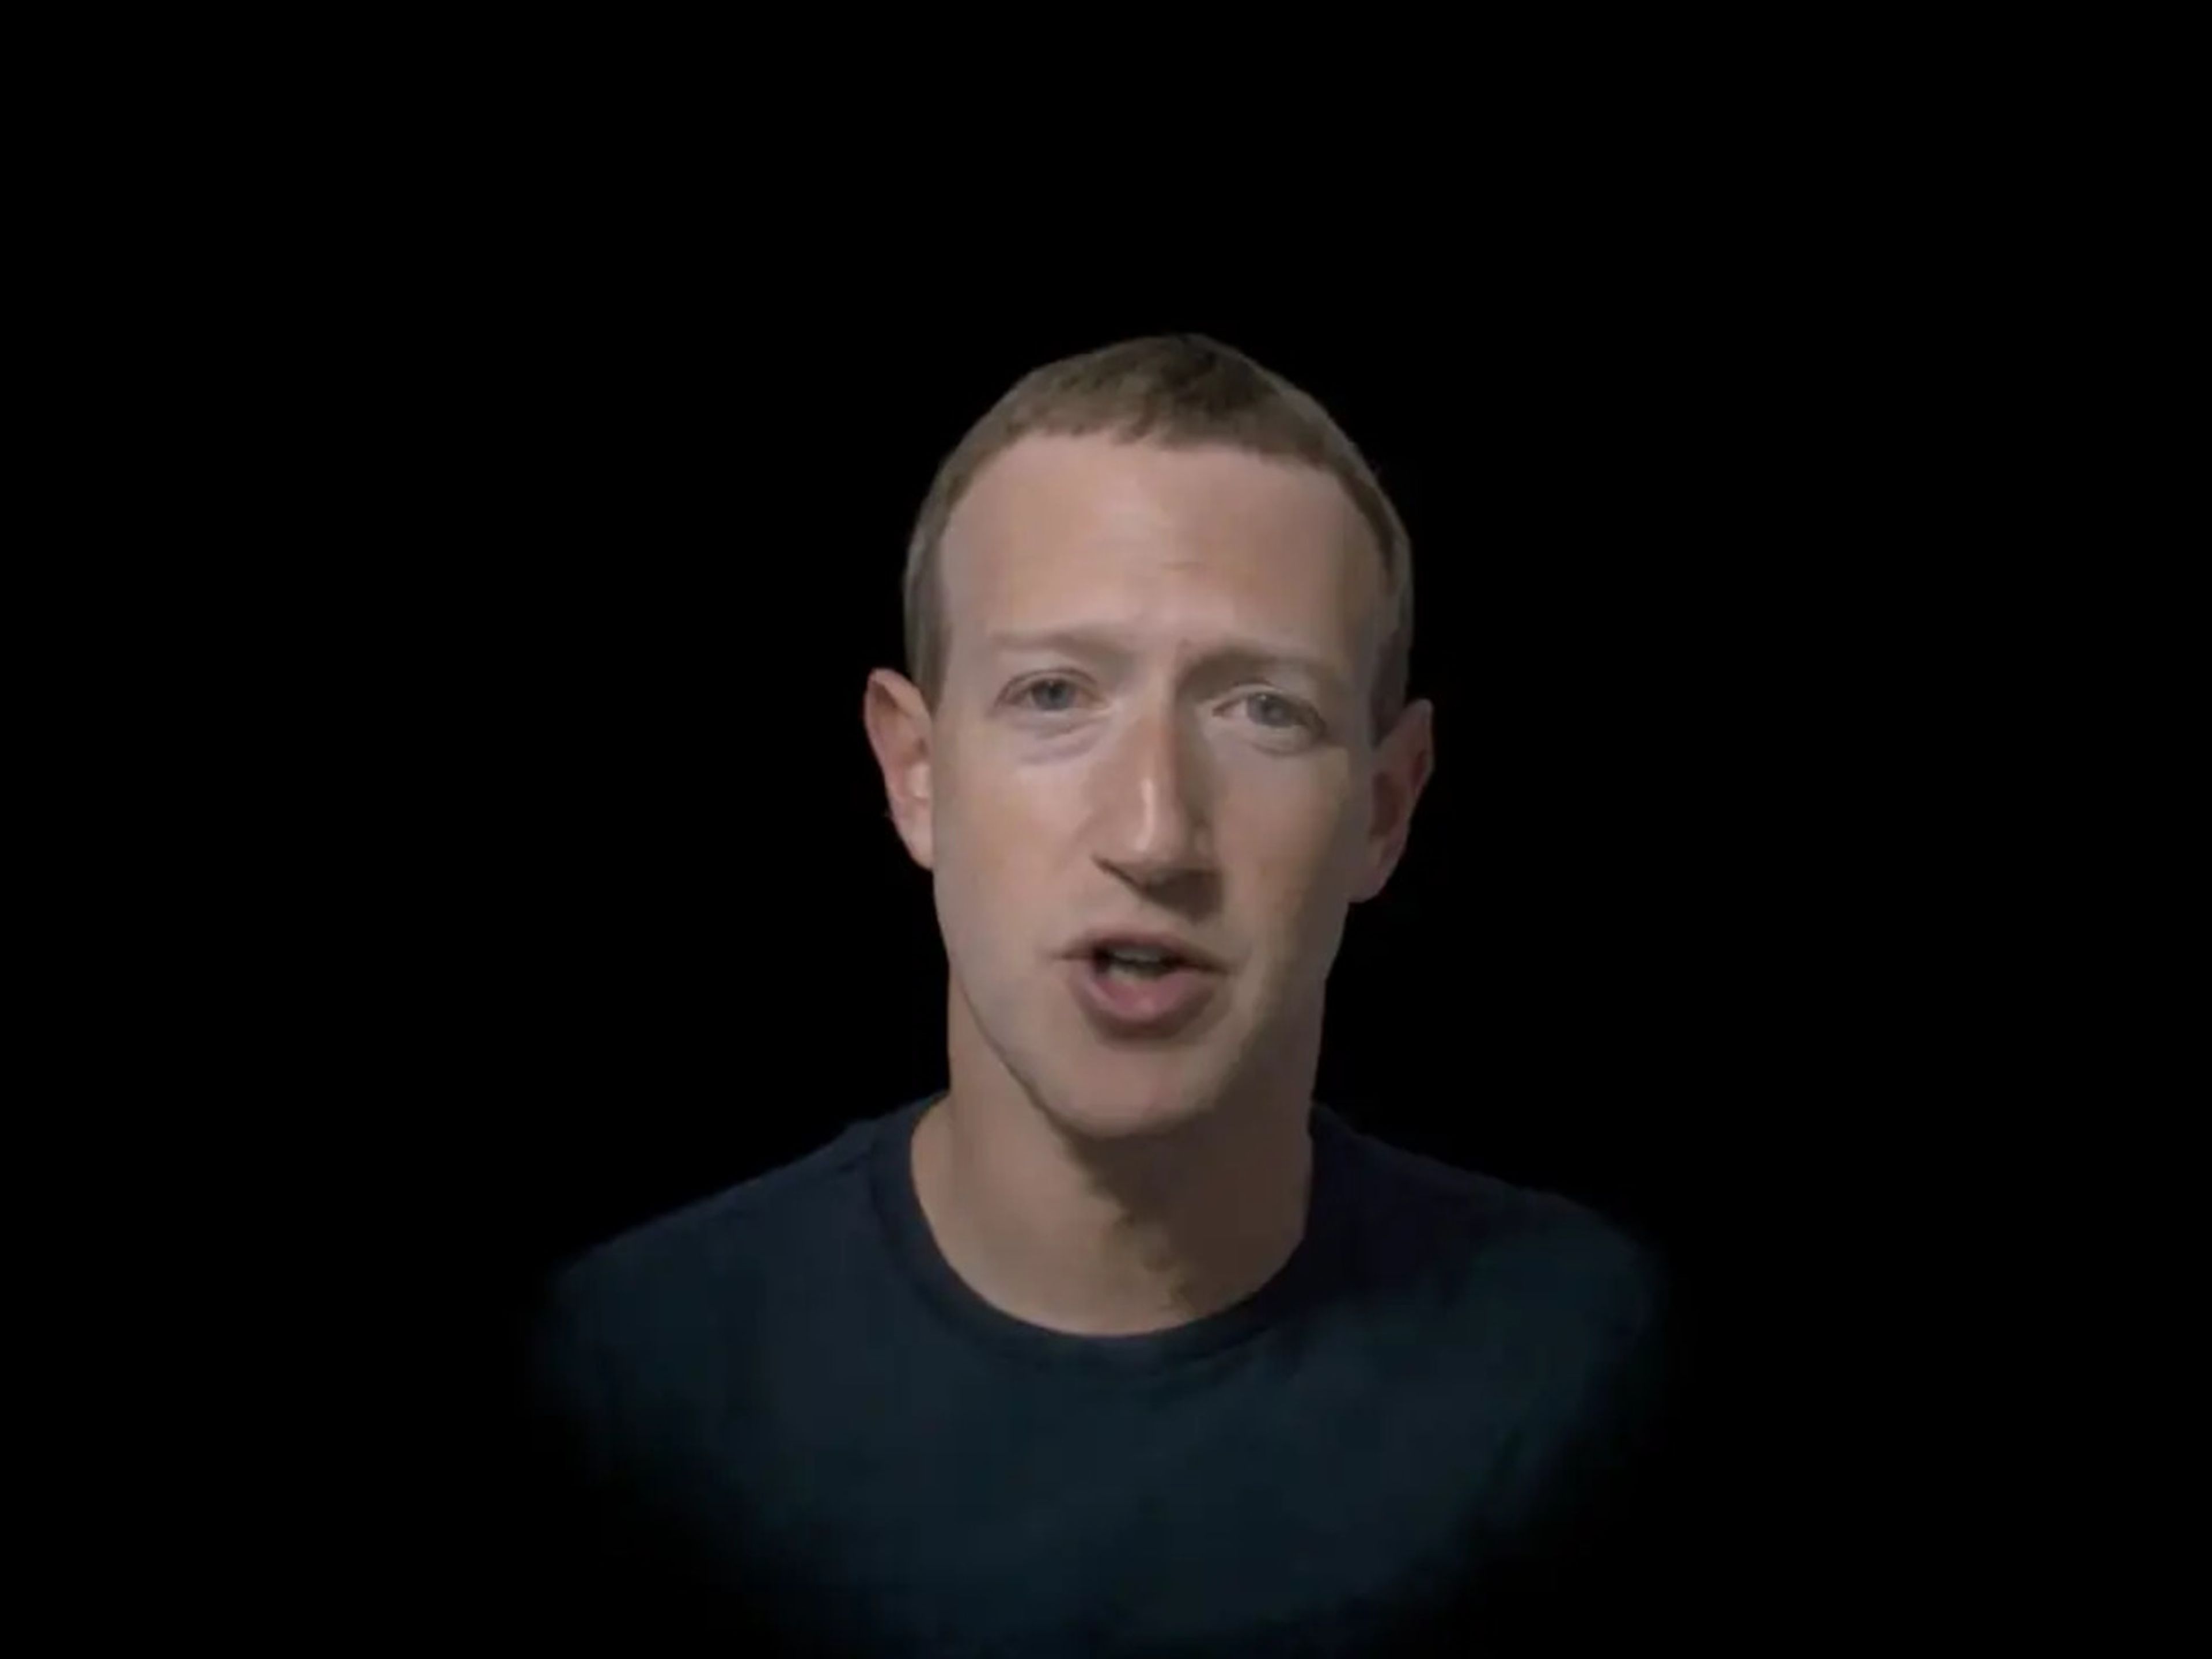 Avatar realista de Zuckerberg